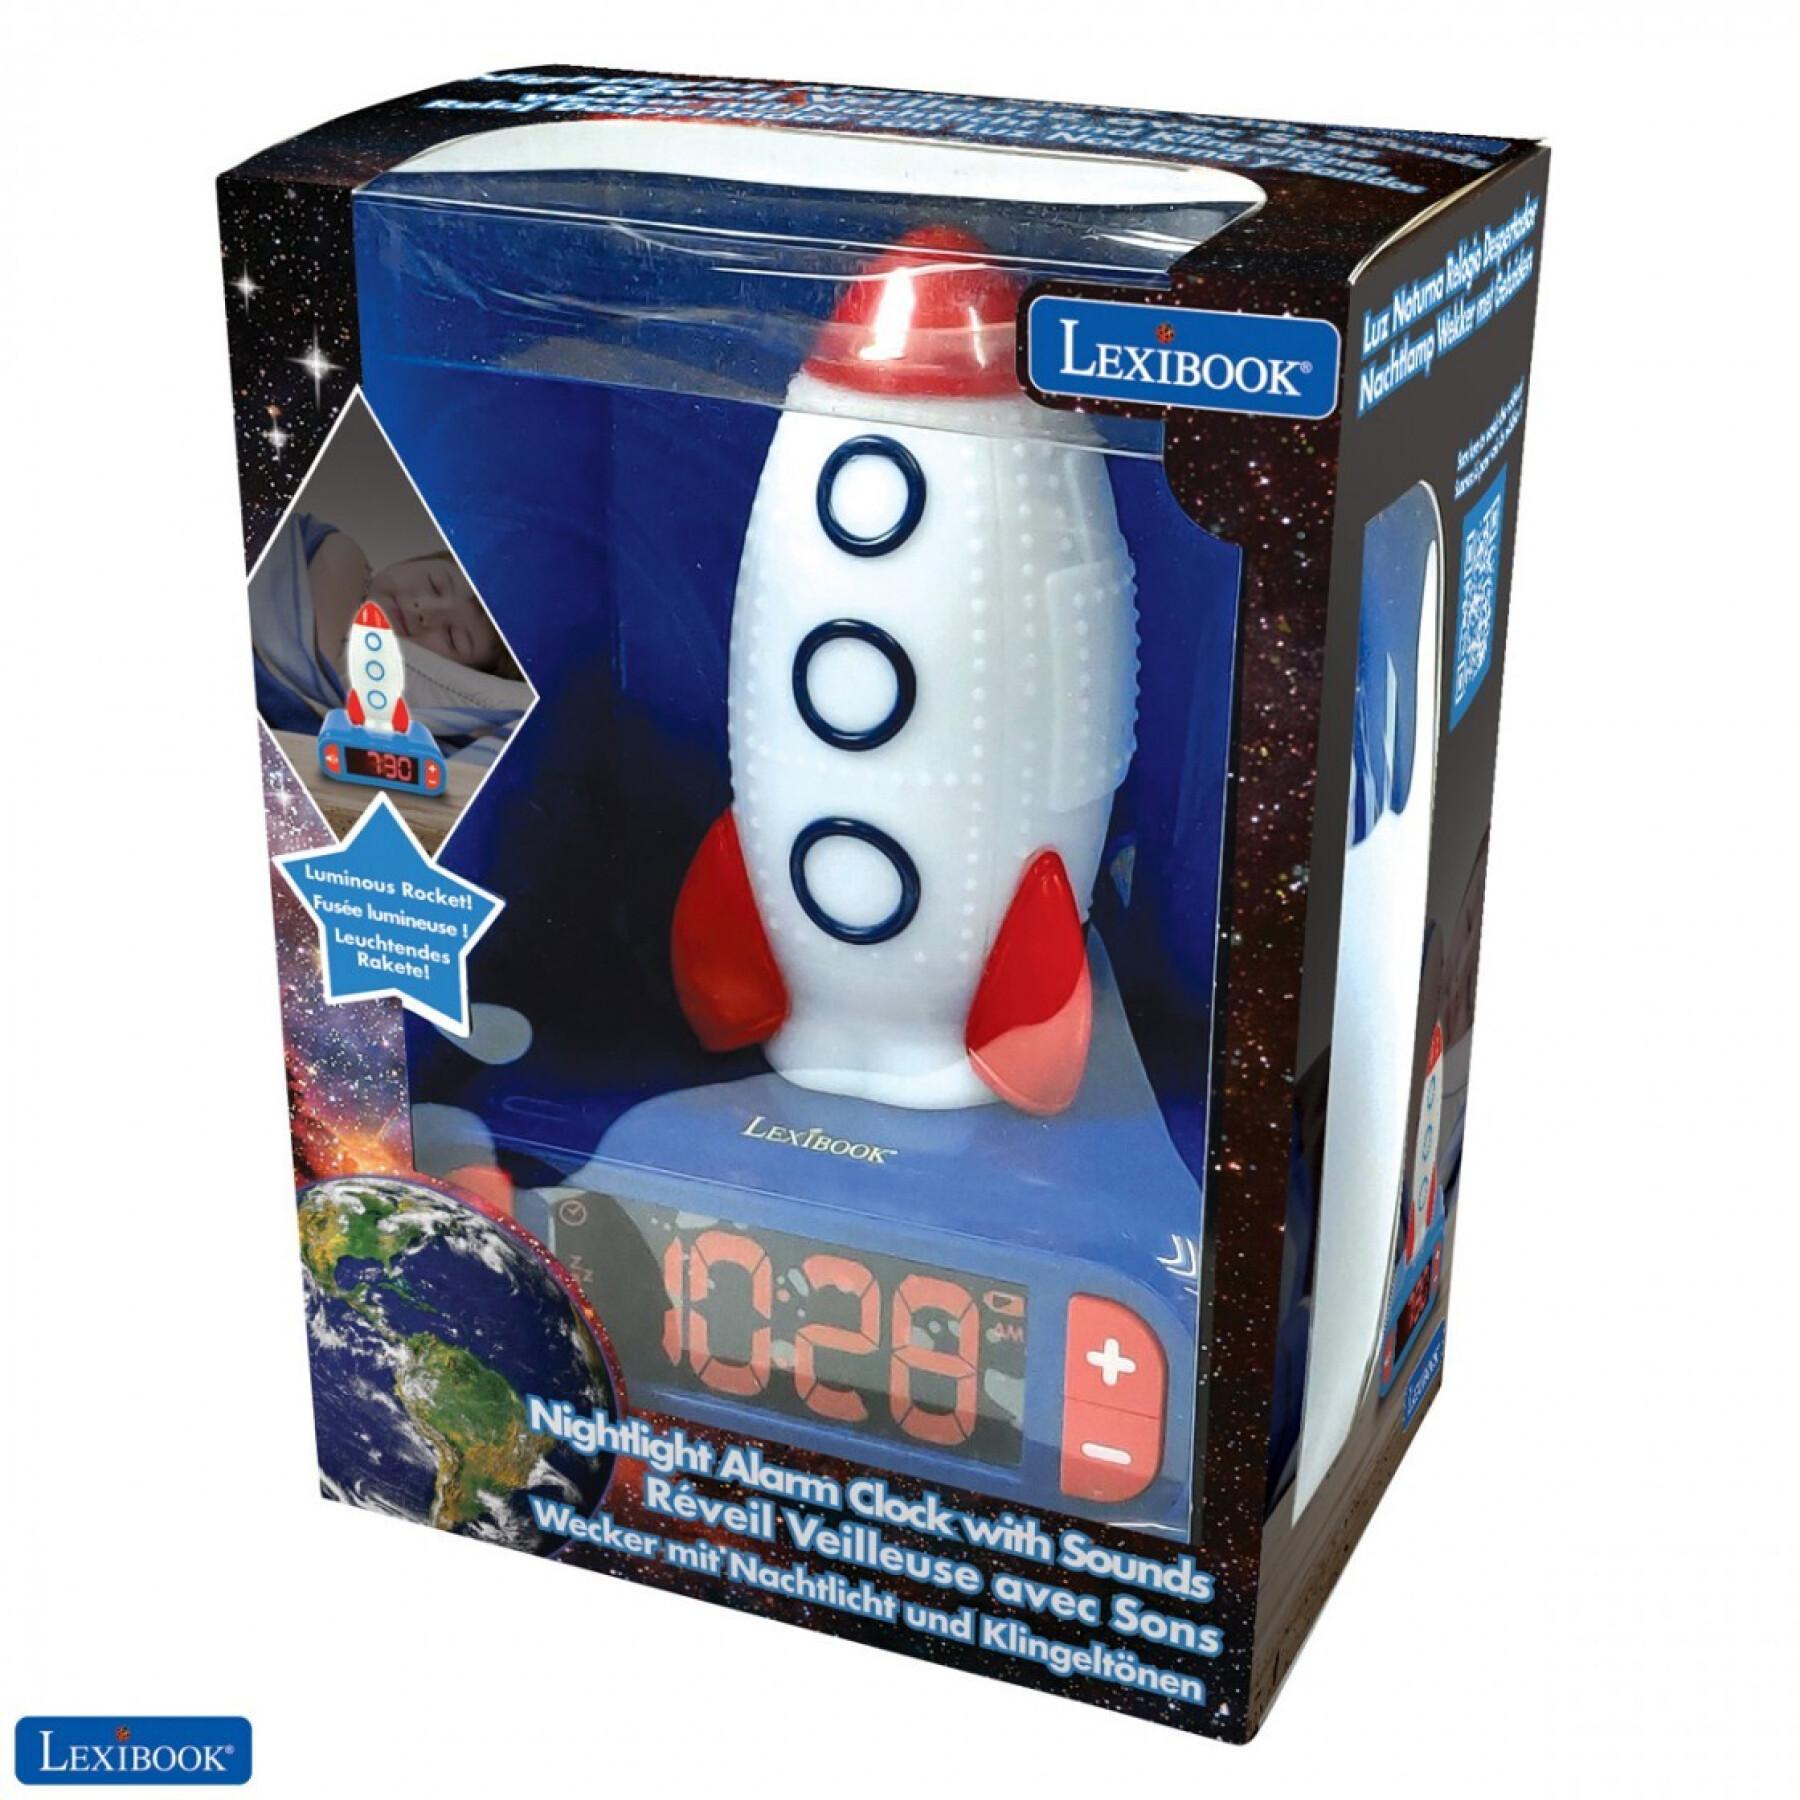 Alarm clock with 3d rocket design, nightlight and sound effects Lexibook